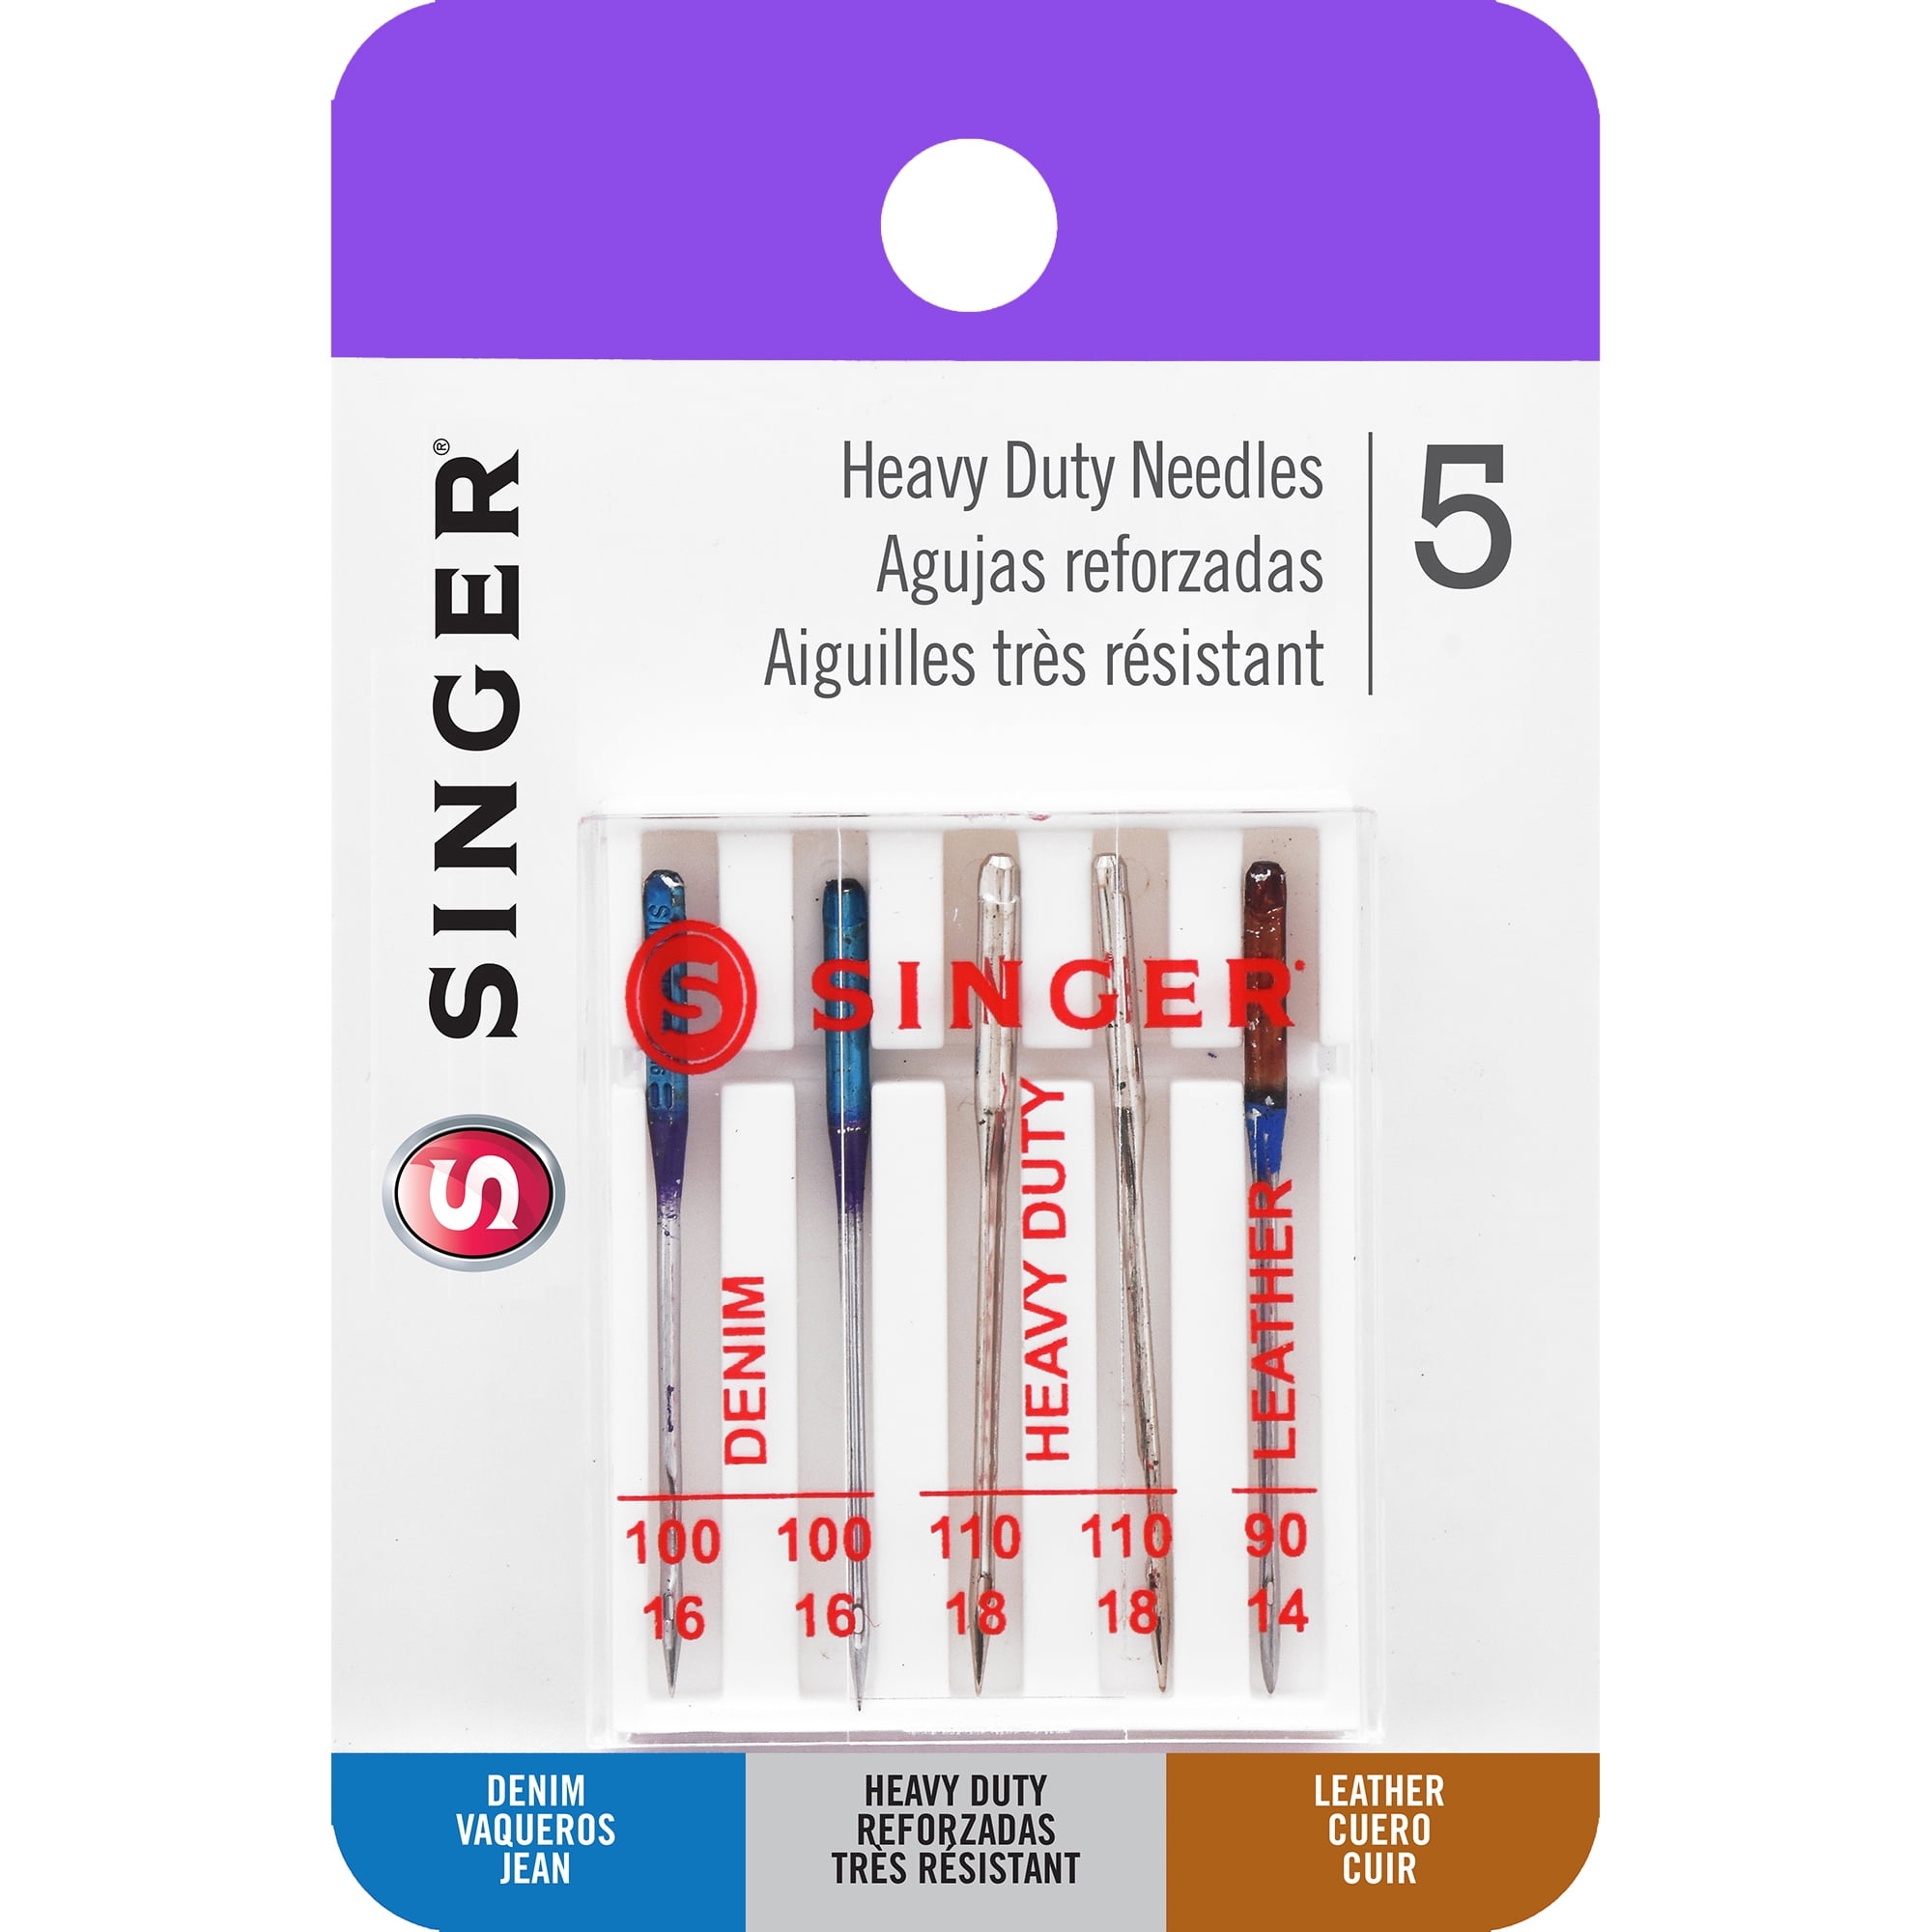 12 Packs: 5 ct. (60 total) SINGER® Heavy Duty Sewing Machine Needles 